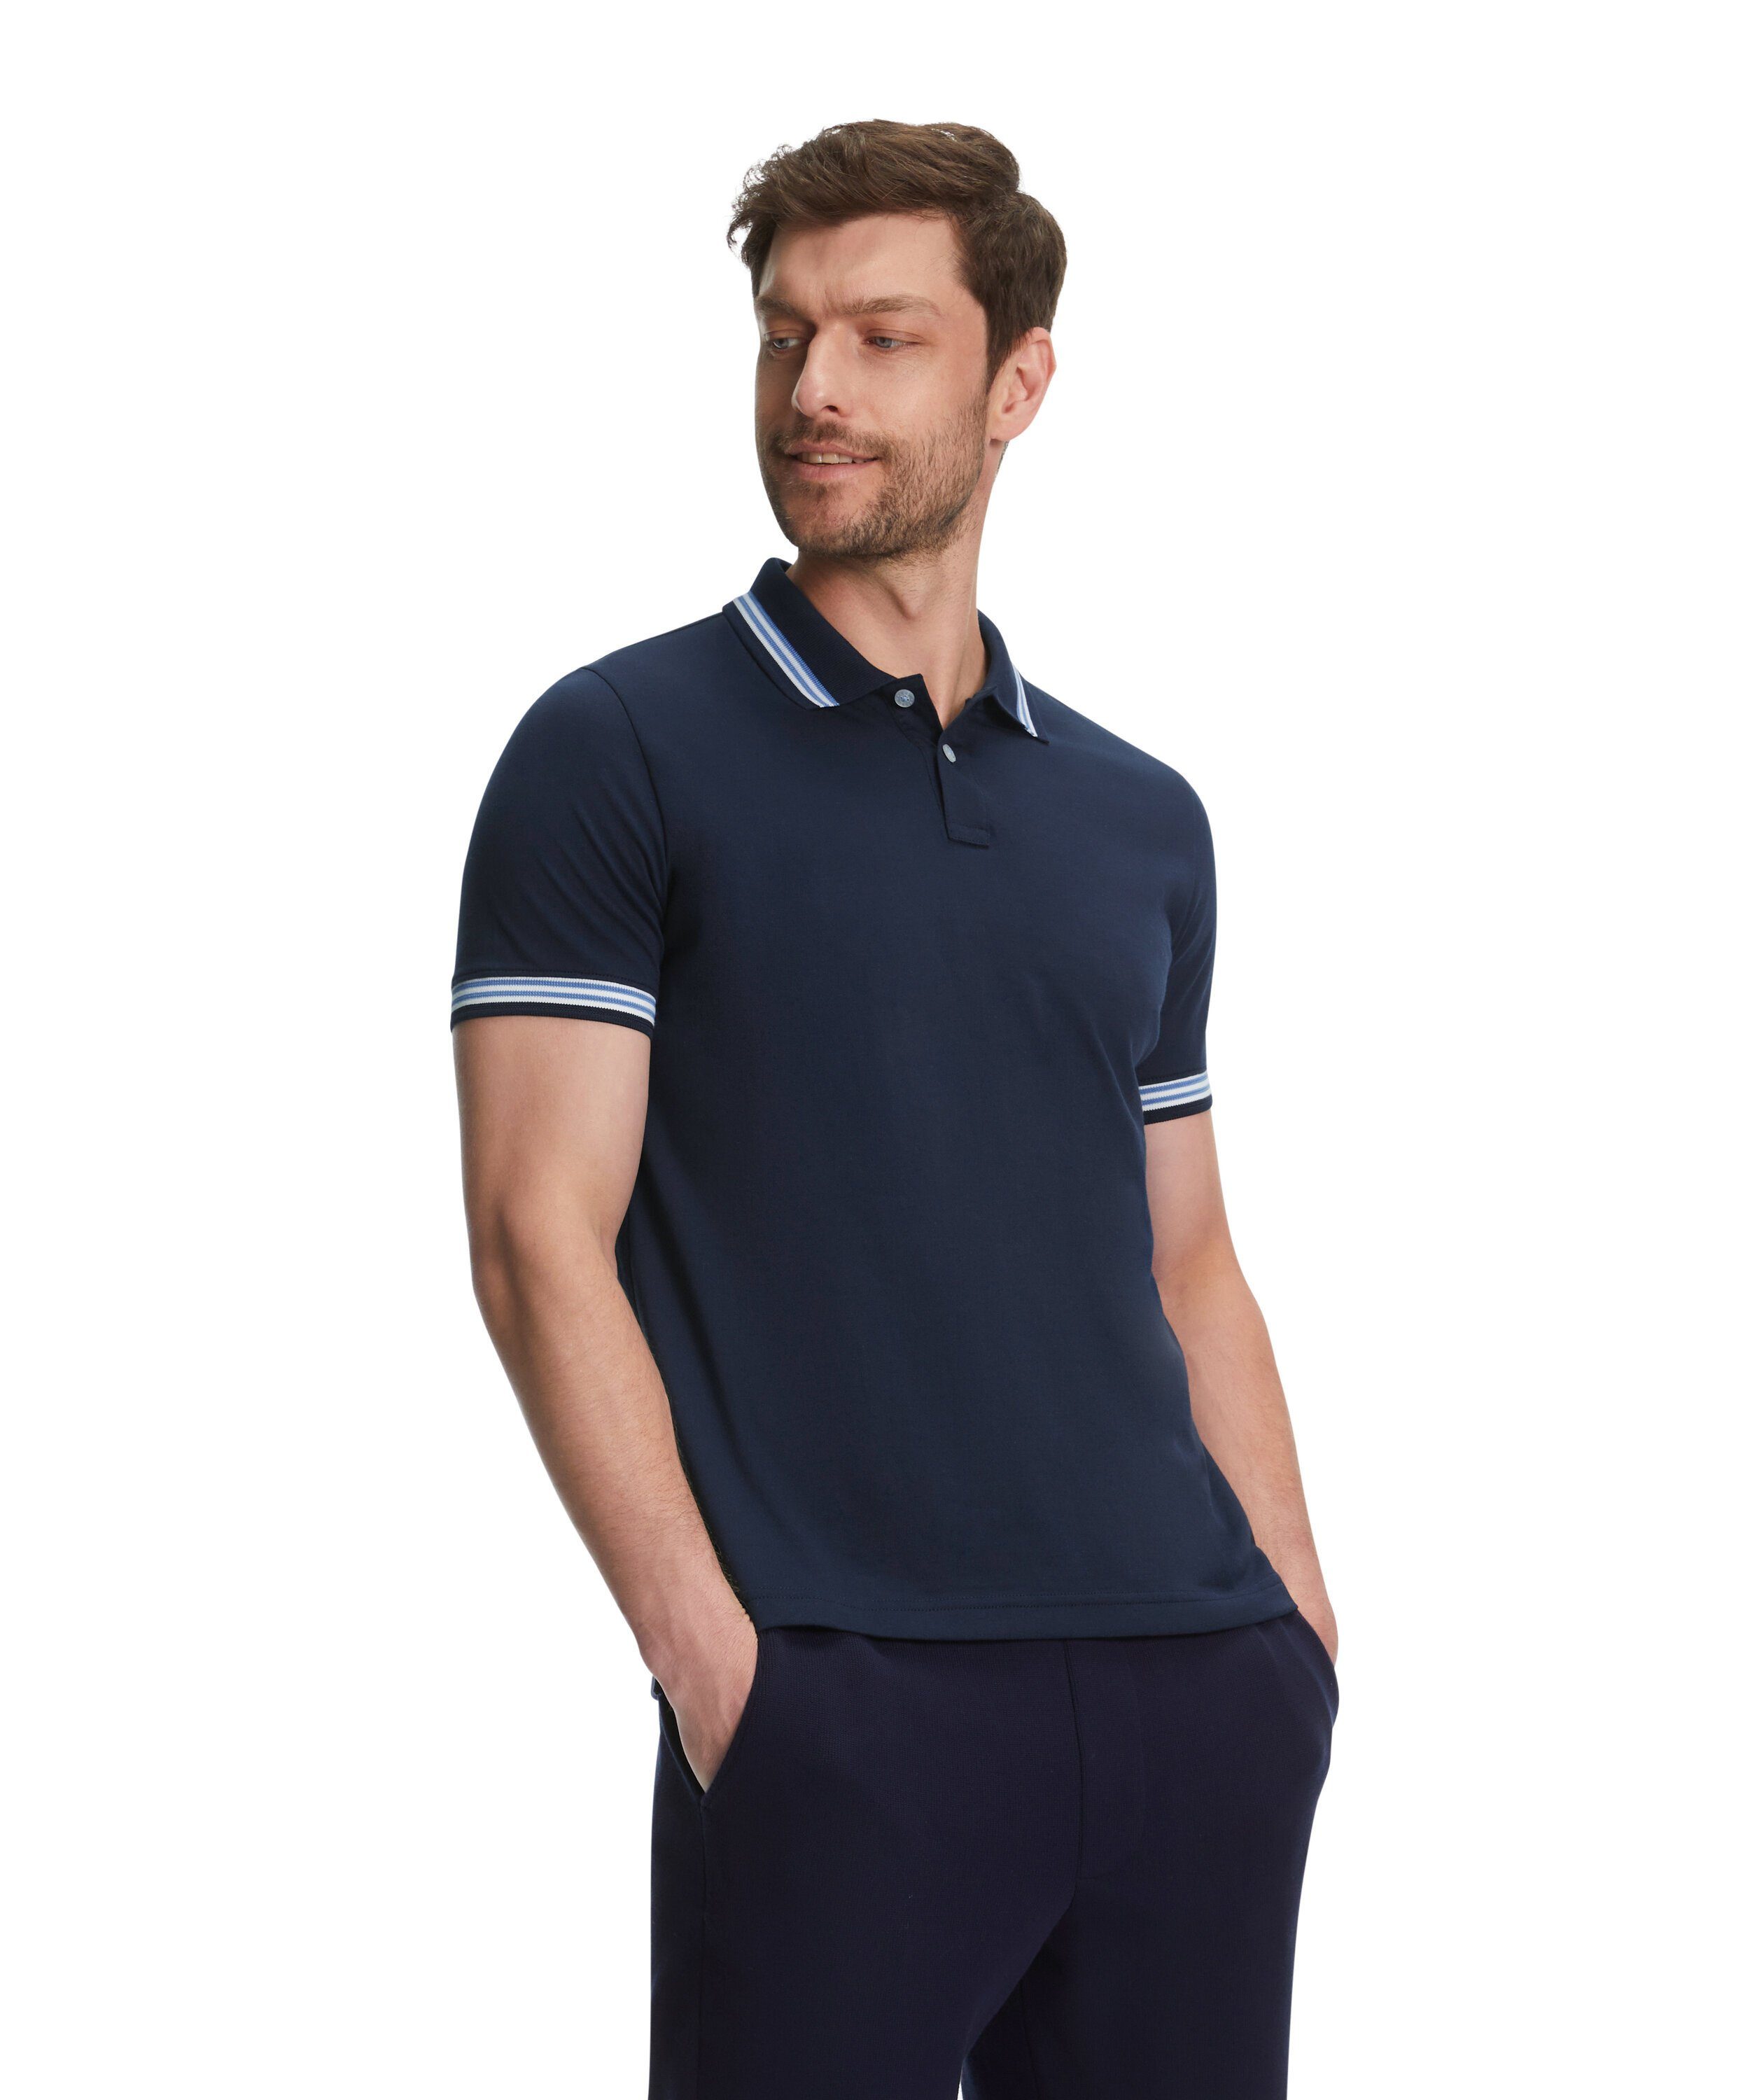 FALKE Poloshirt blue space hochwertiger (6116) aus Pima-Baumwolle